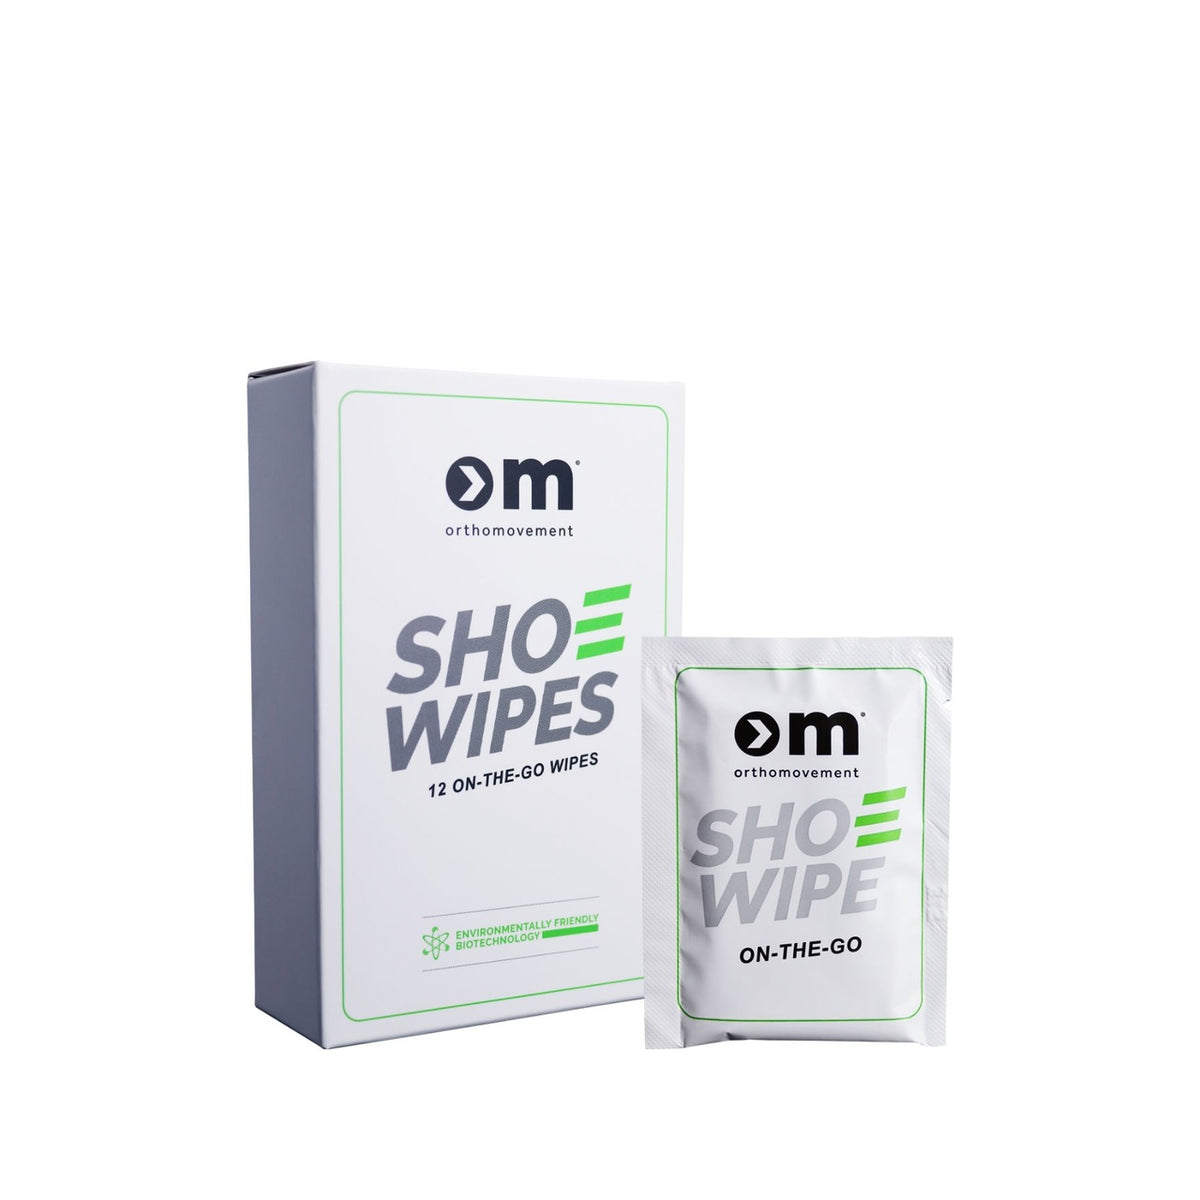 Shoe Shine Wipes – Amenity Services